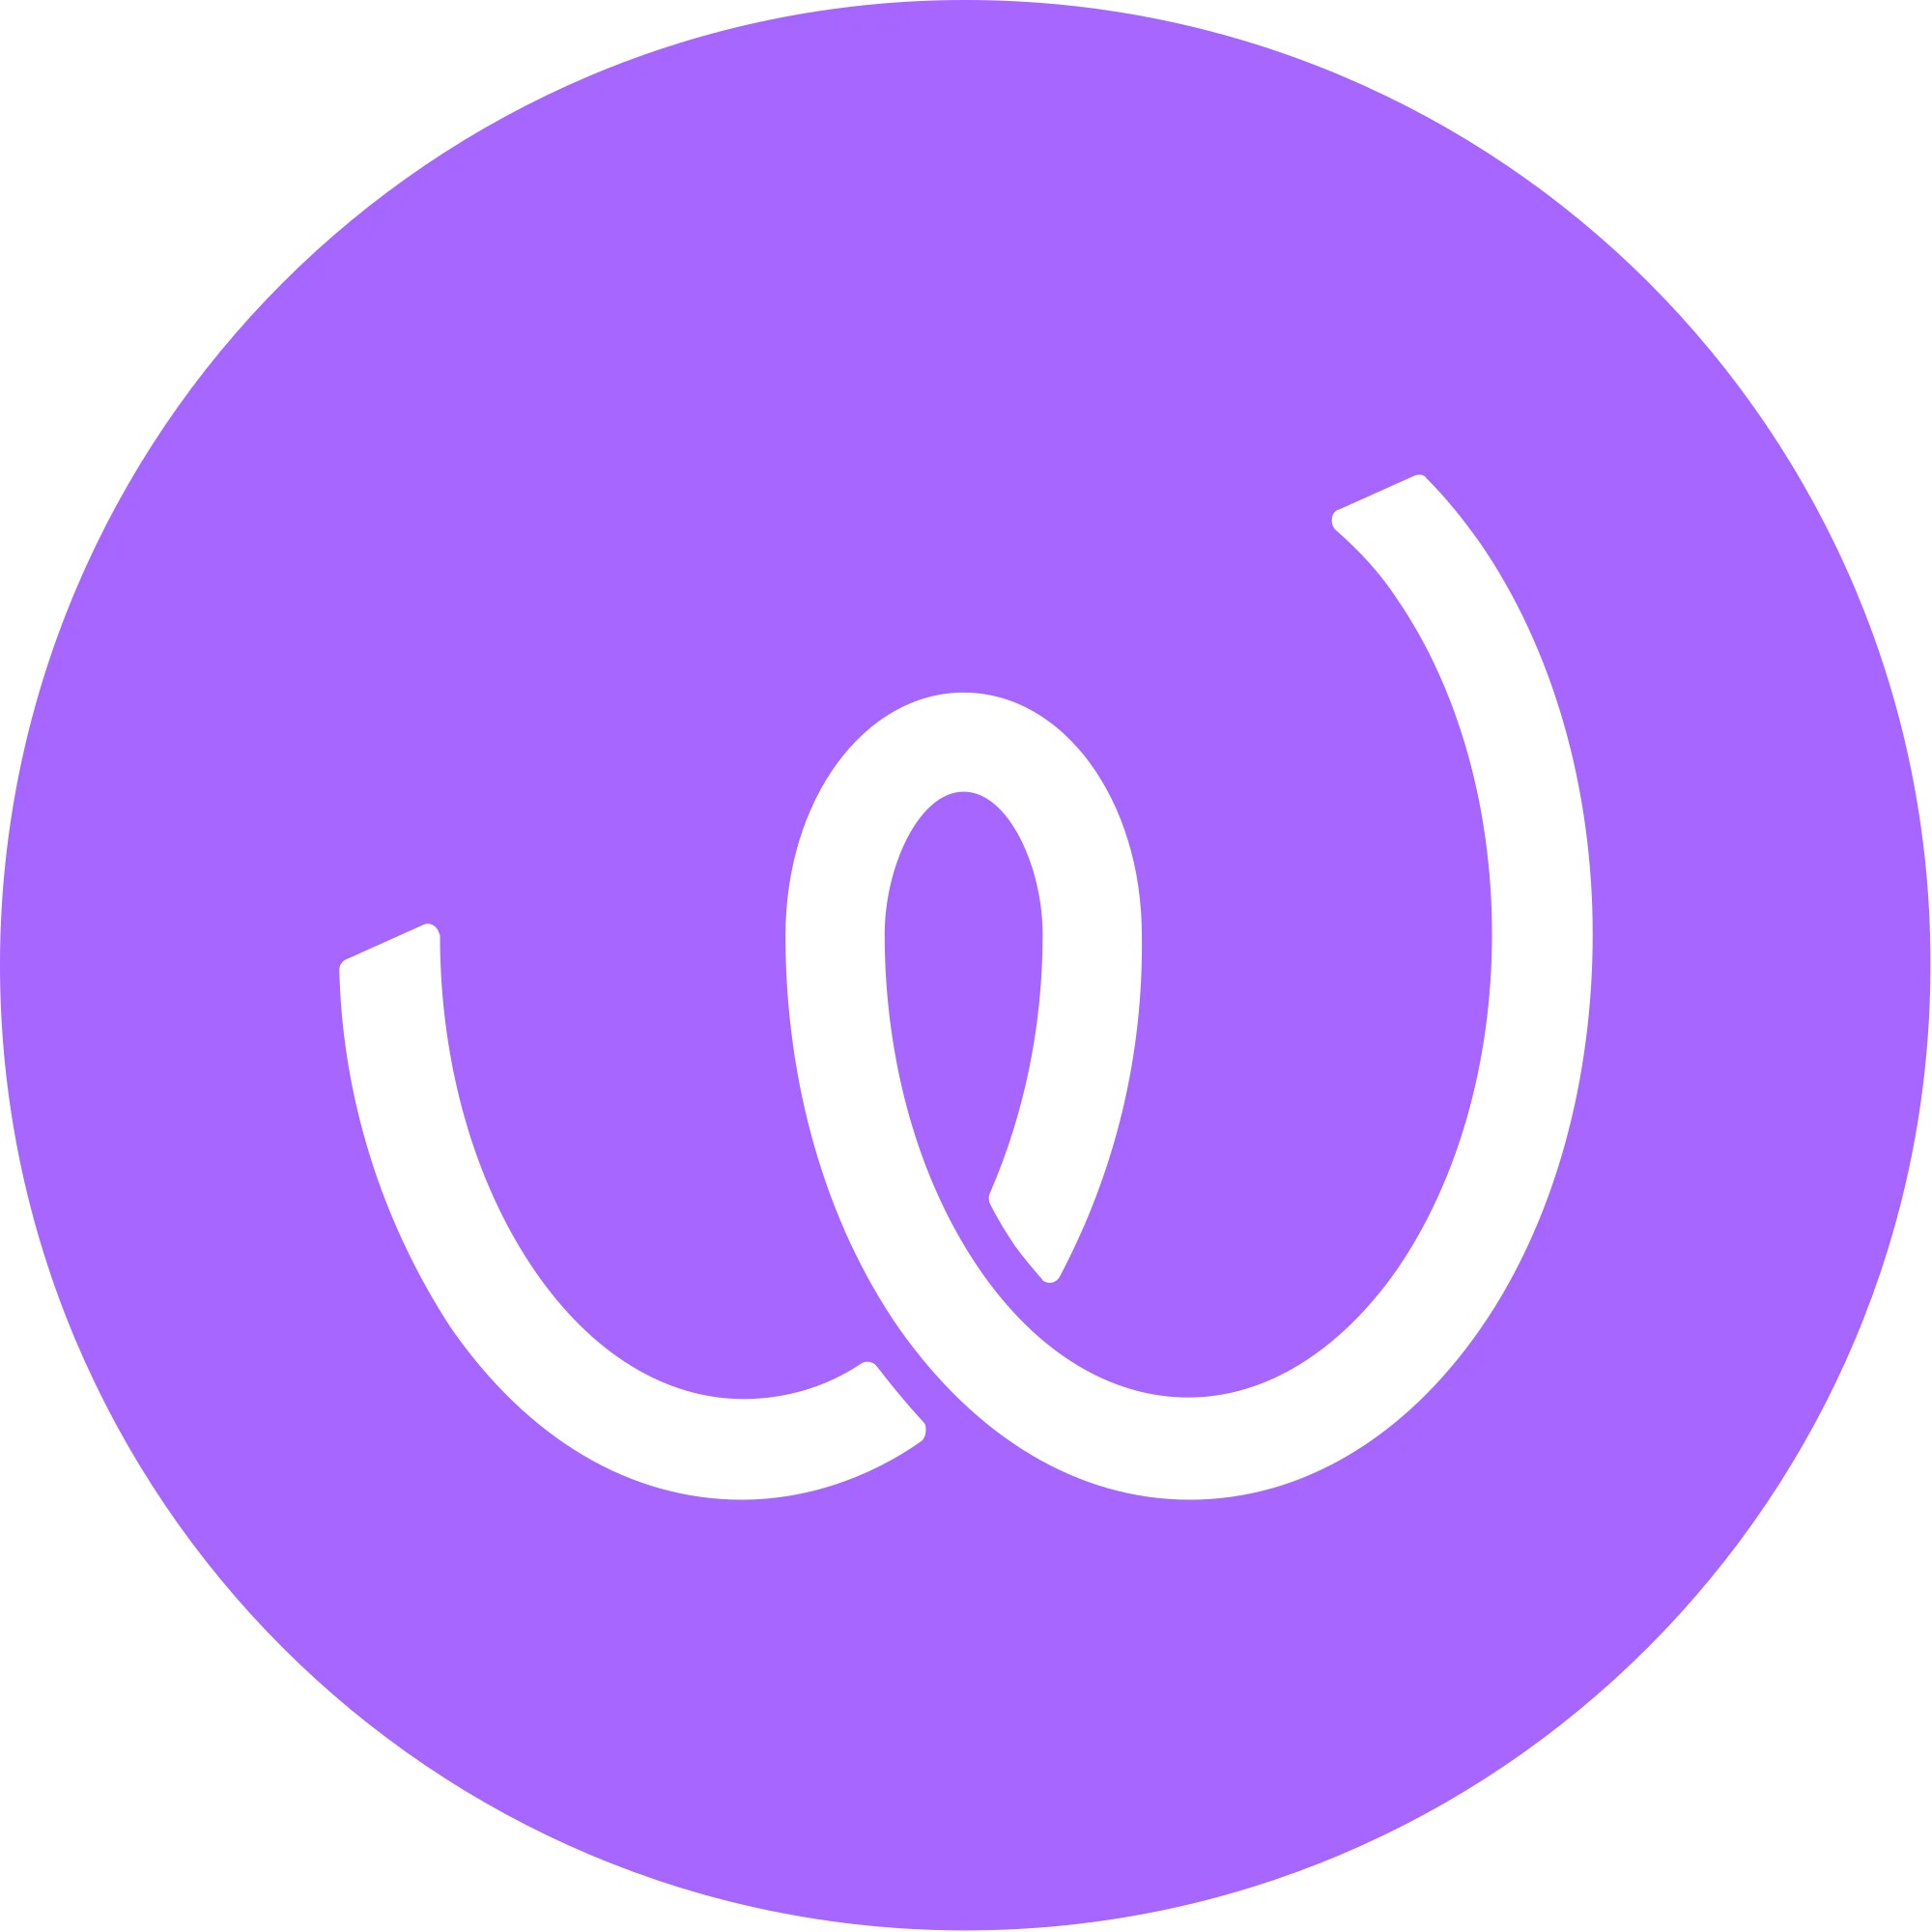 Energy Web Token logo in png format